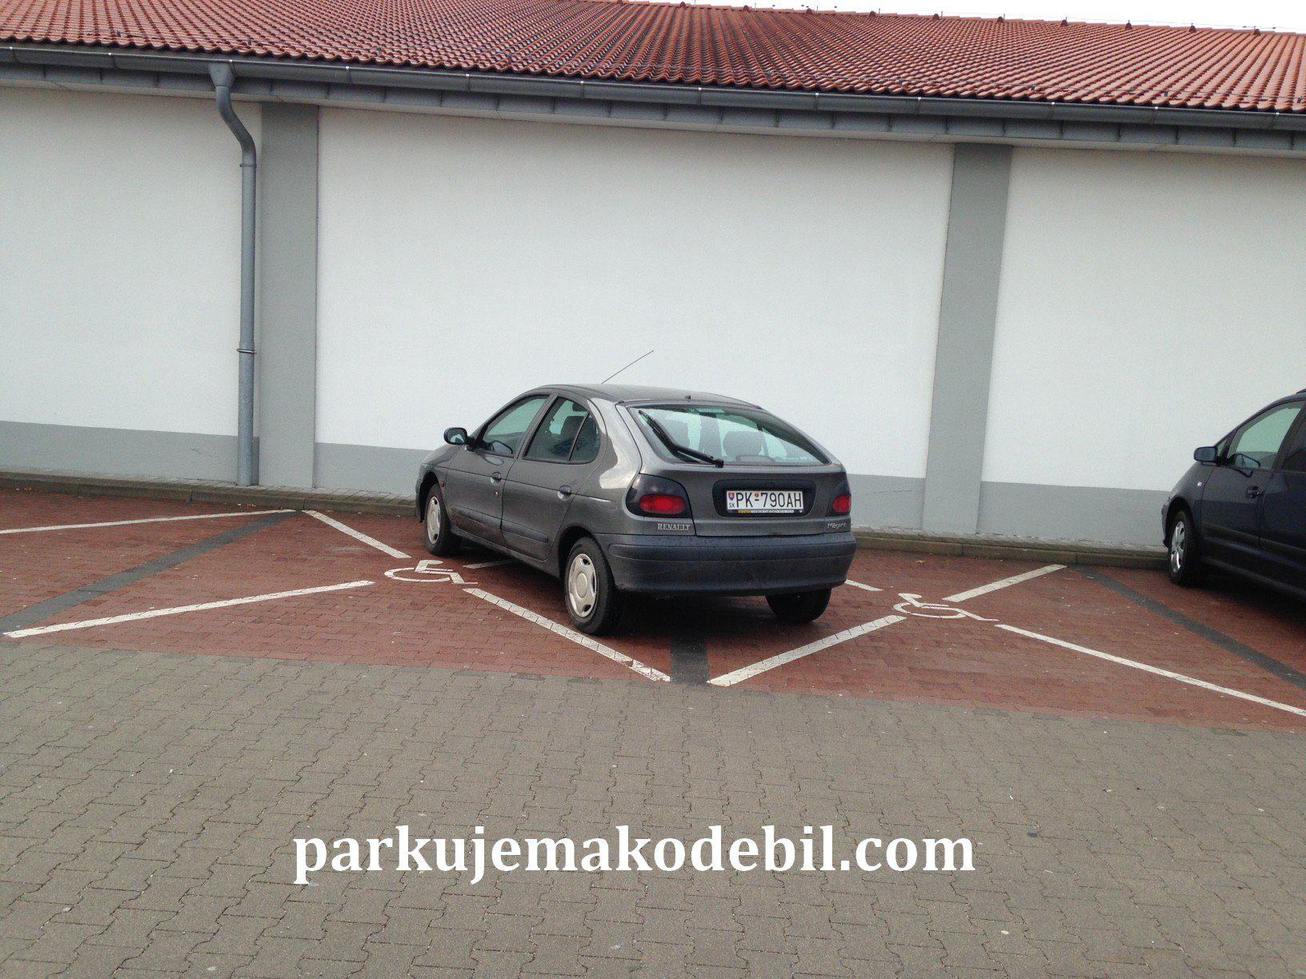 Obrázek disabledparking